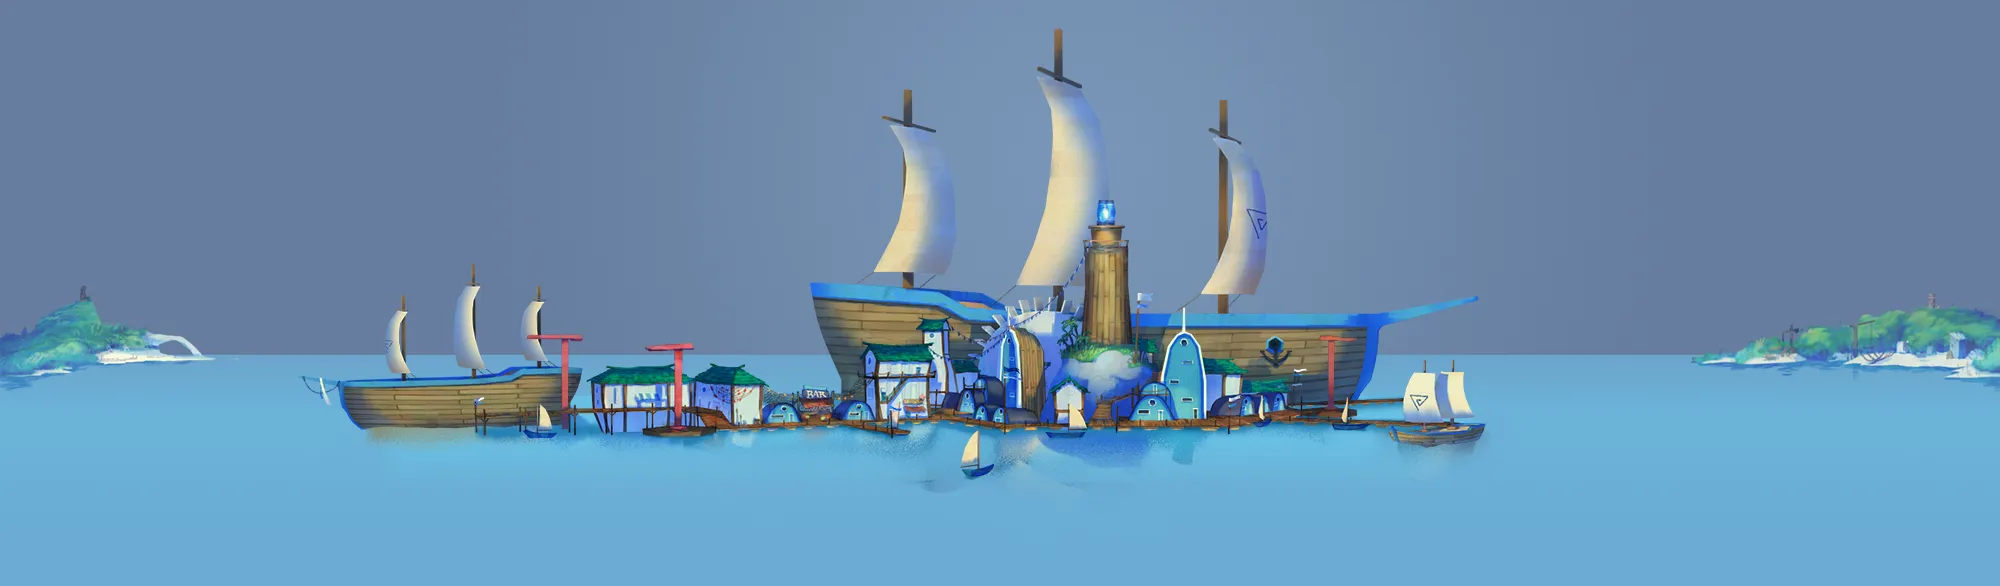 VR Tribes - Sea Village render 